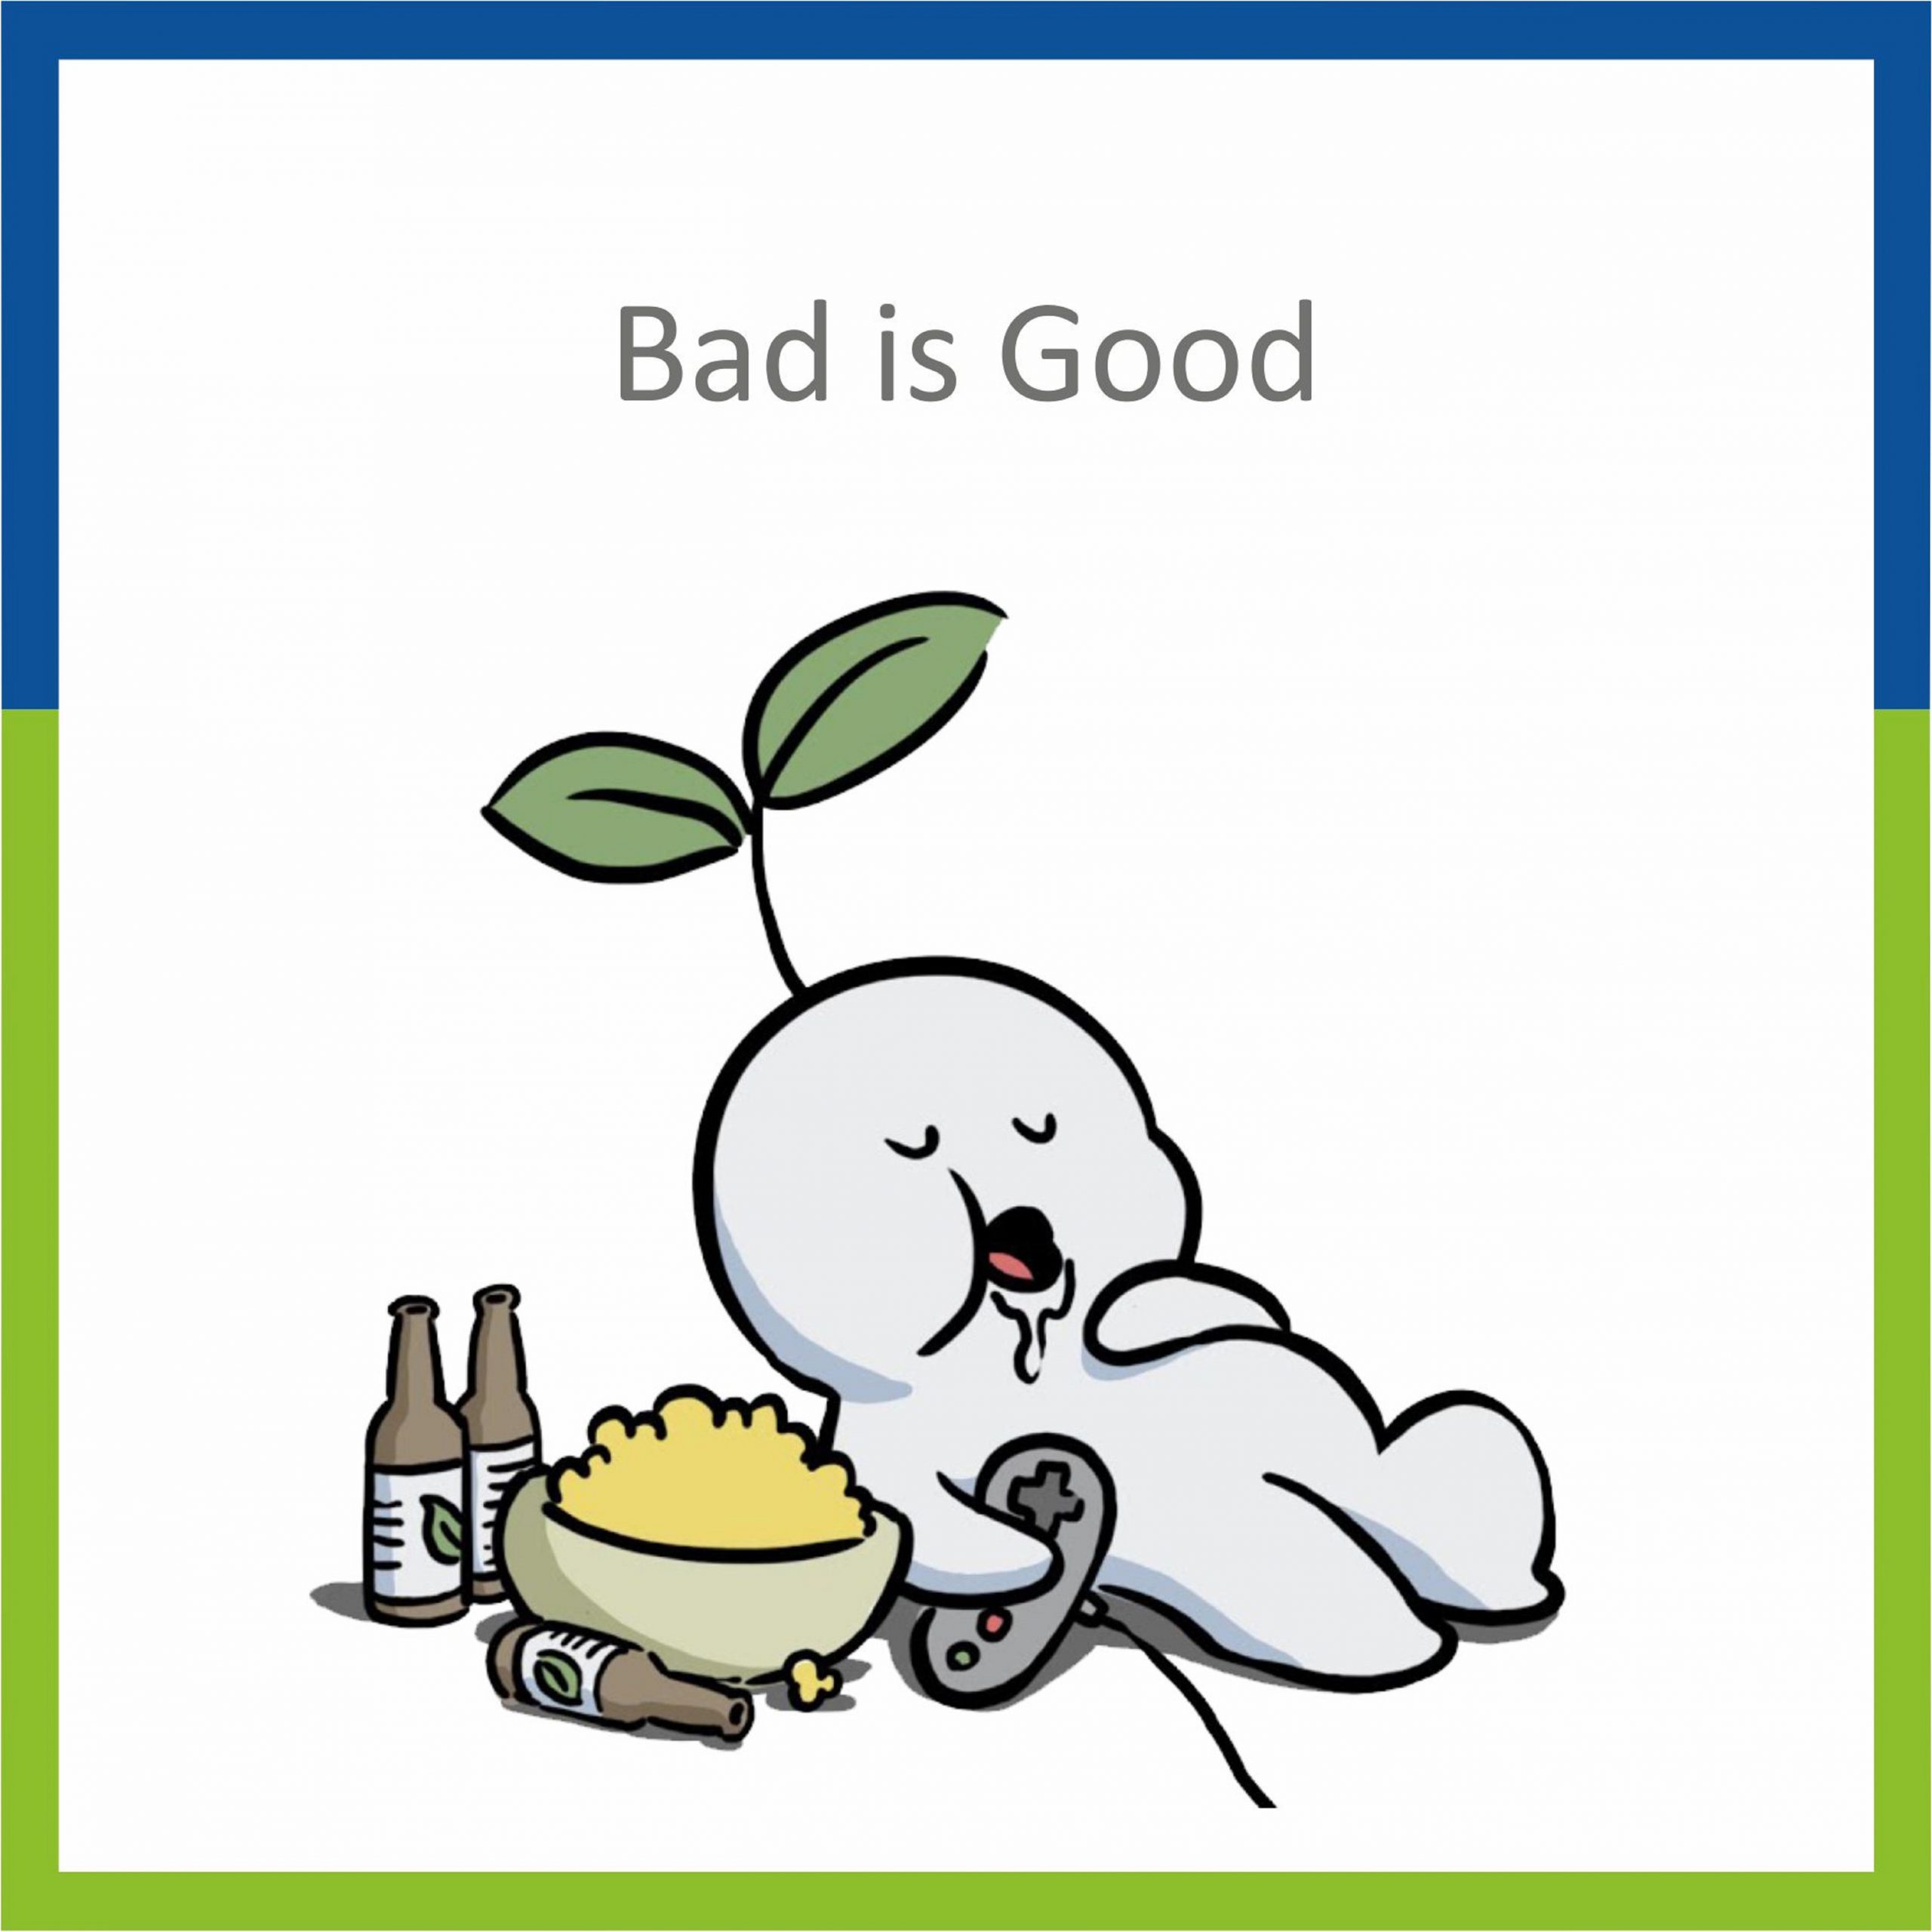 Bad is Good